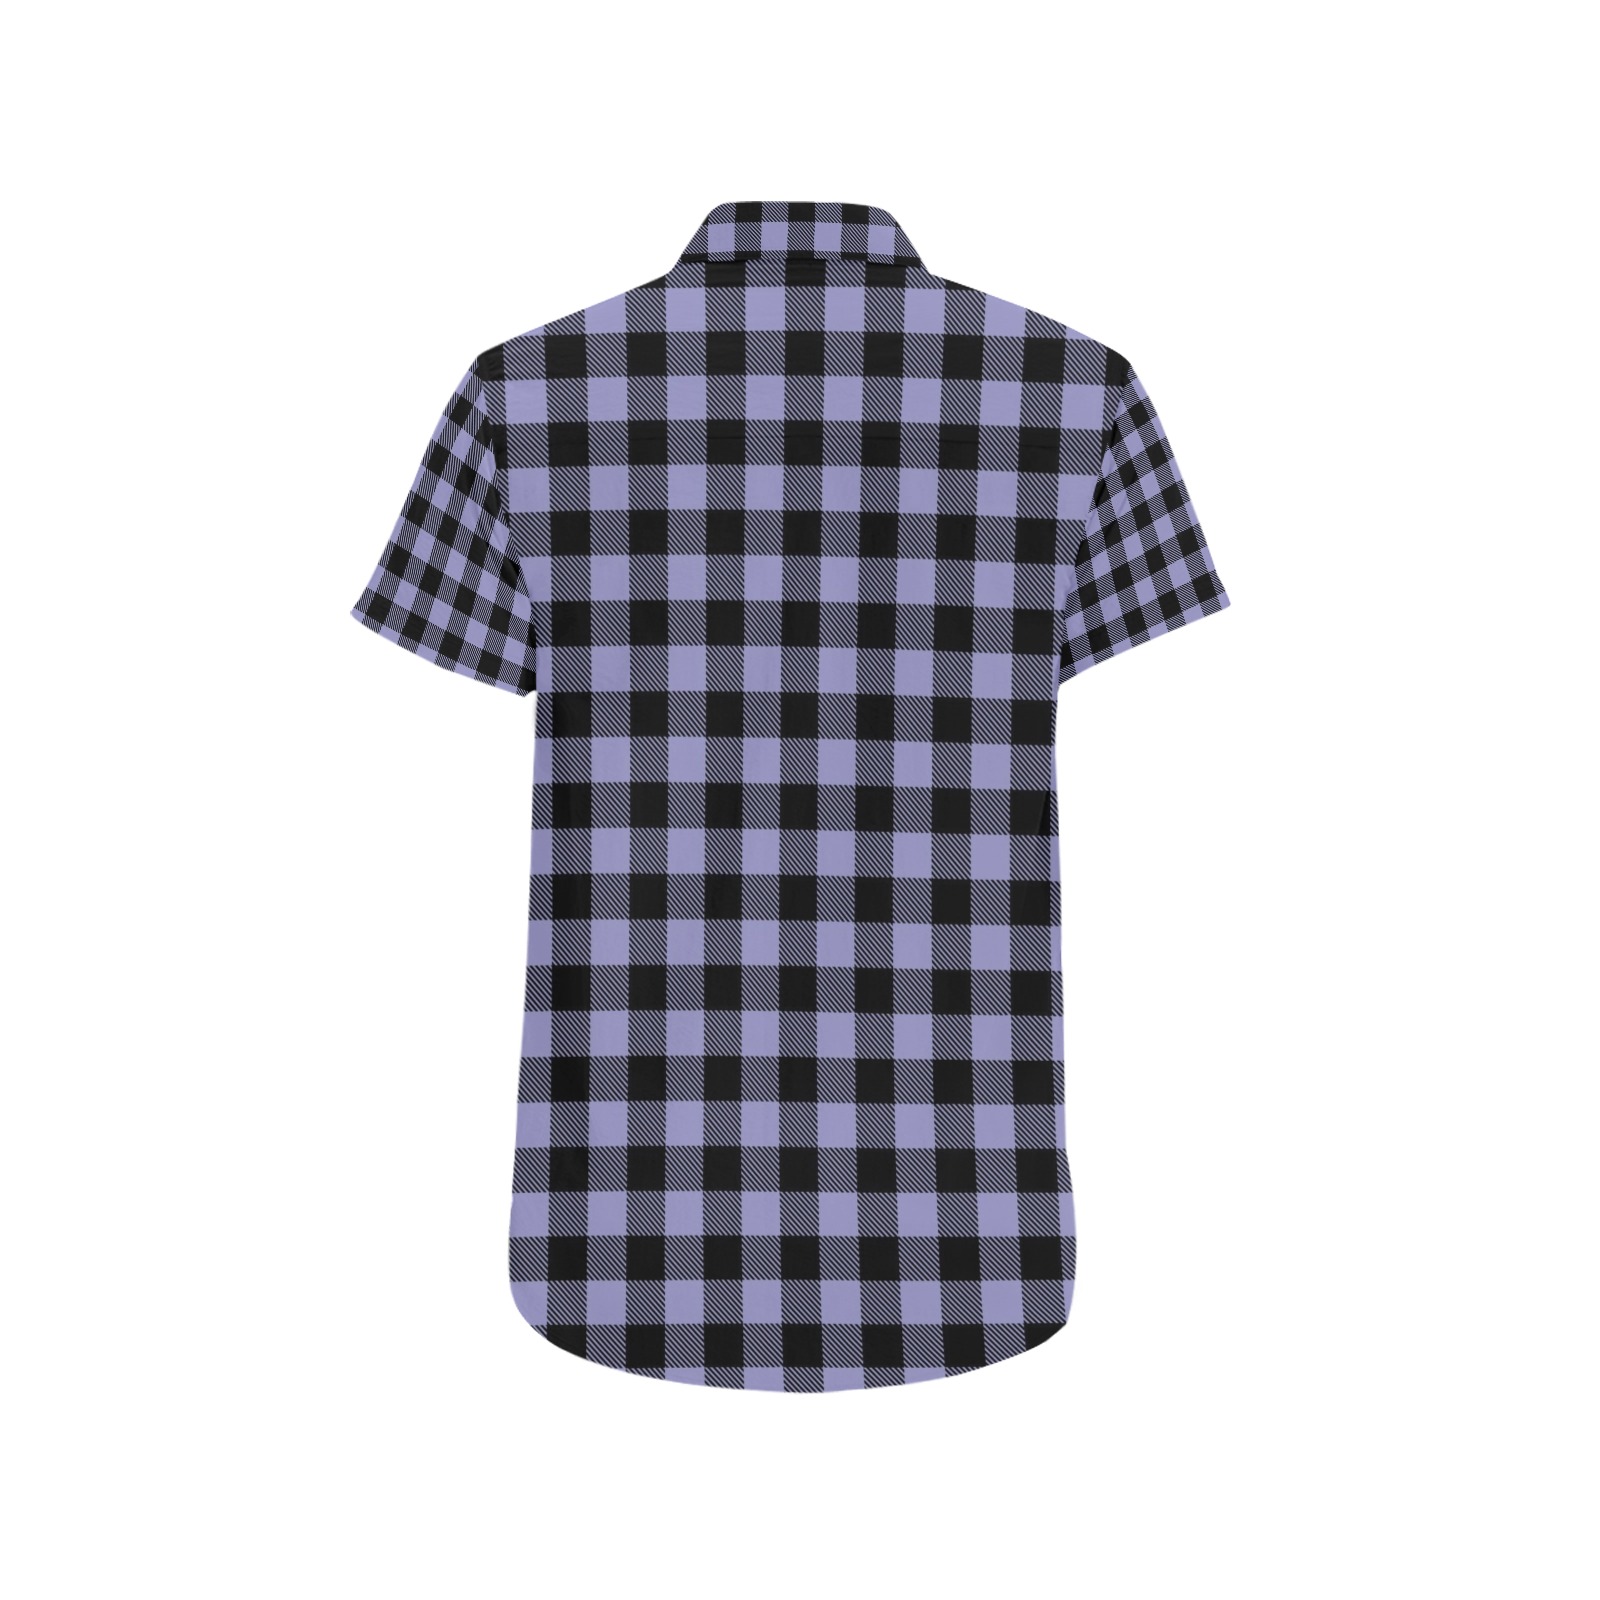 Buffalo Print - Gray and Black Men's All Over Print Short Sleeve Shirt (Model T53)